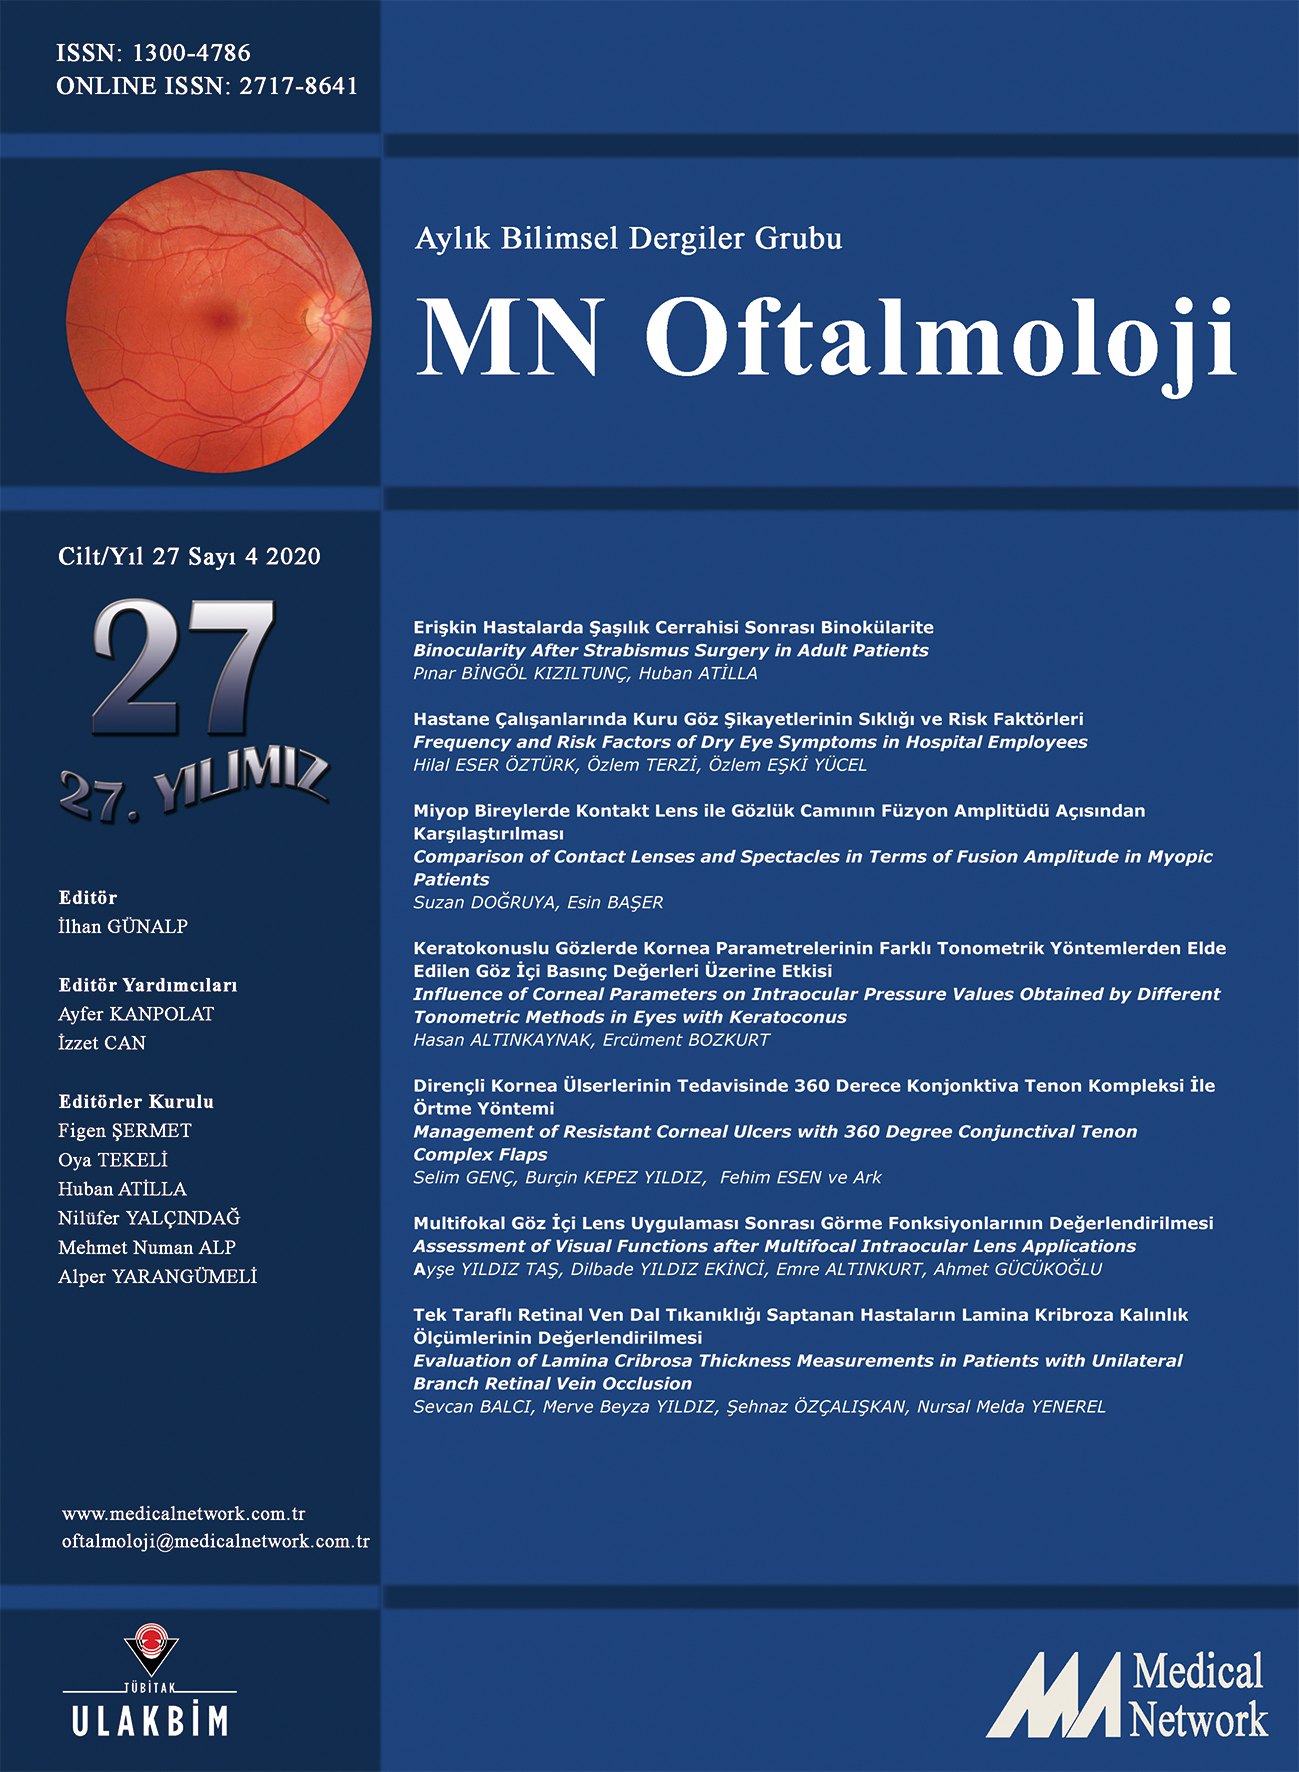 <p>MN Oftalmoloji Cilt: 27 Say: 4 2020 (MN Ophthalmology Volume: 27 No: 4 2020)</p>